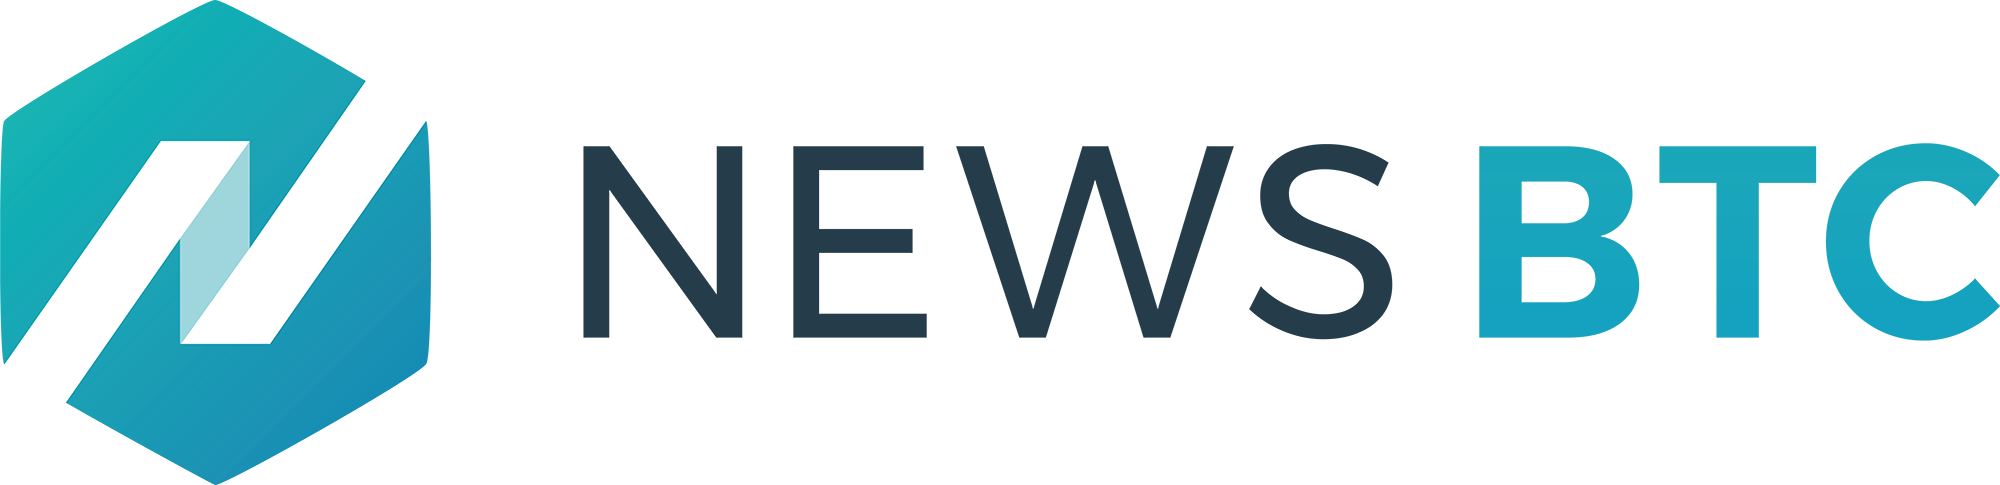 newsbtc logo